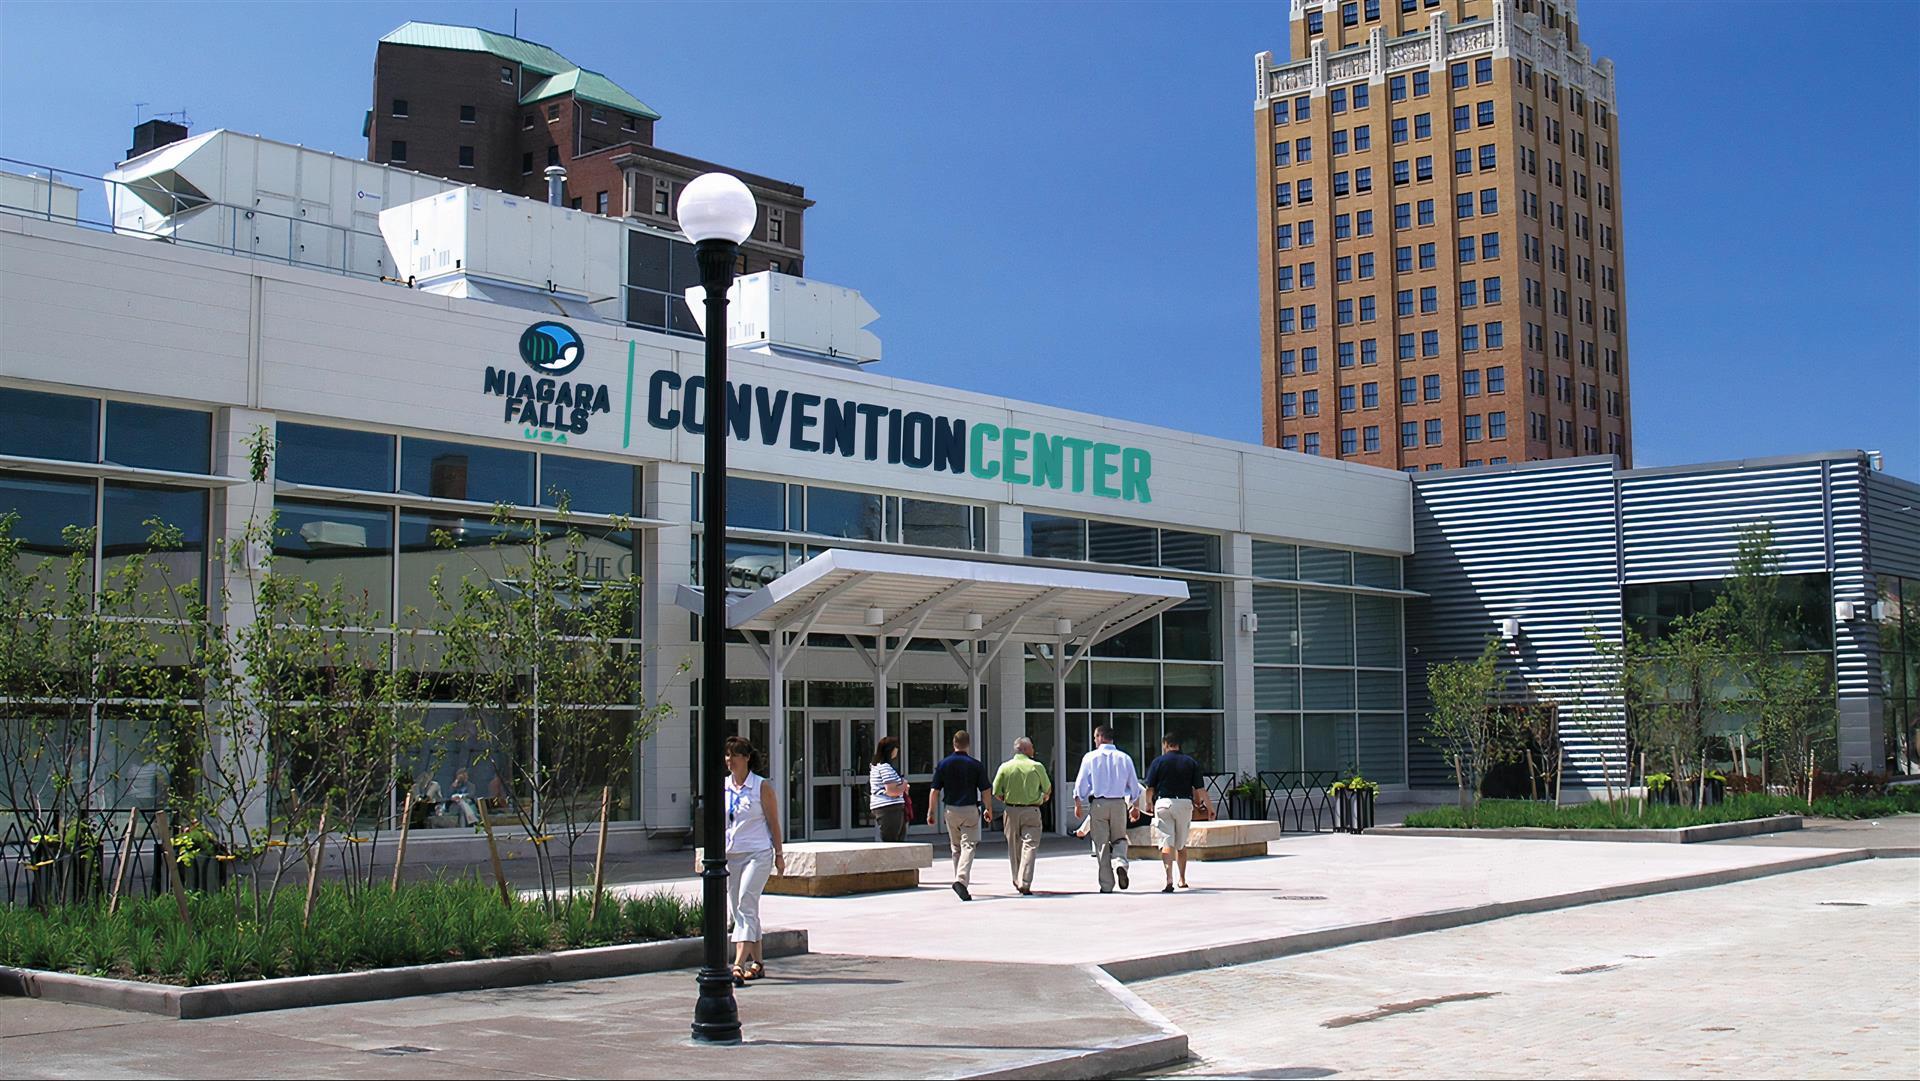 Niagara Falls Convention Center (NFCC) in Niagara Falls, NY